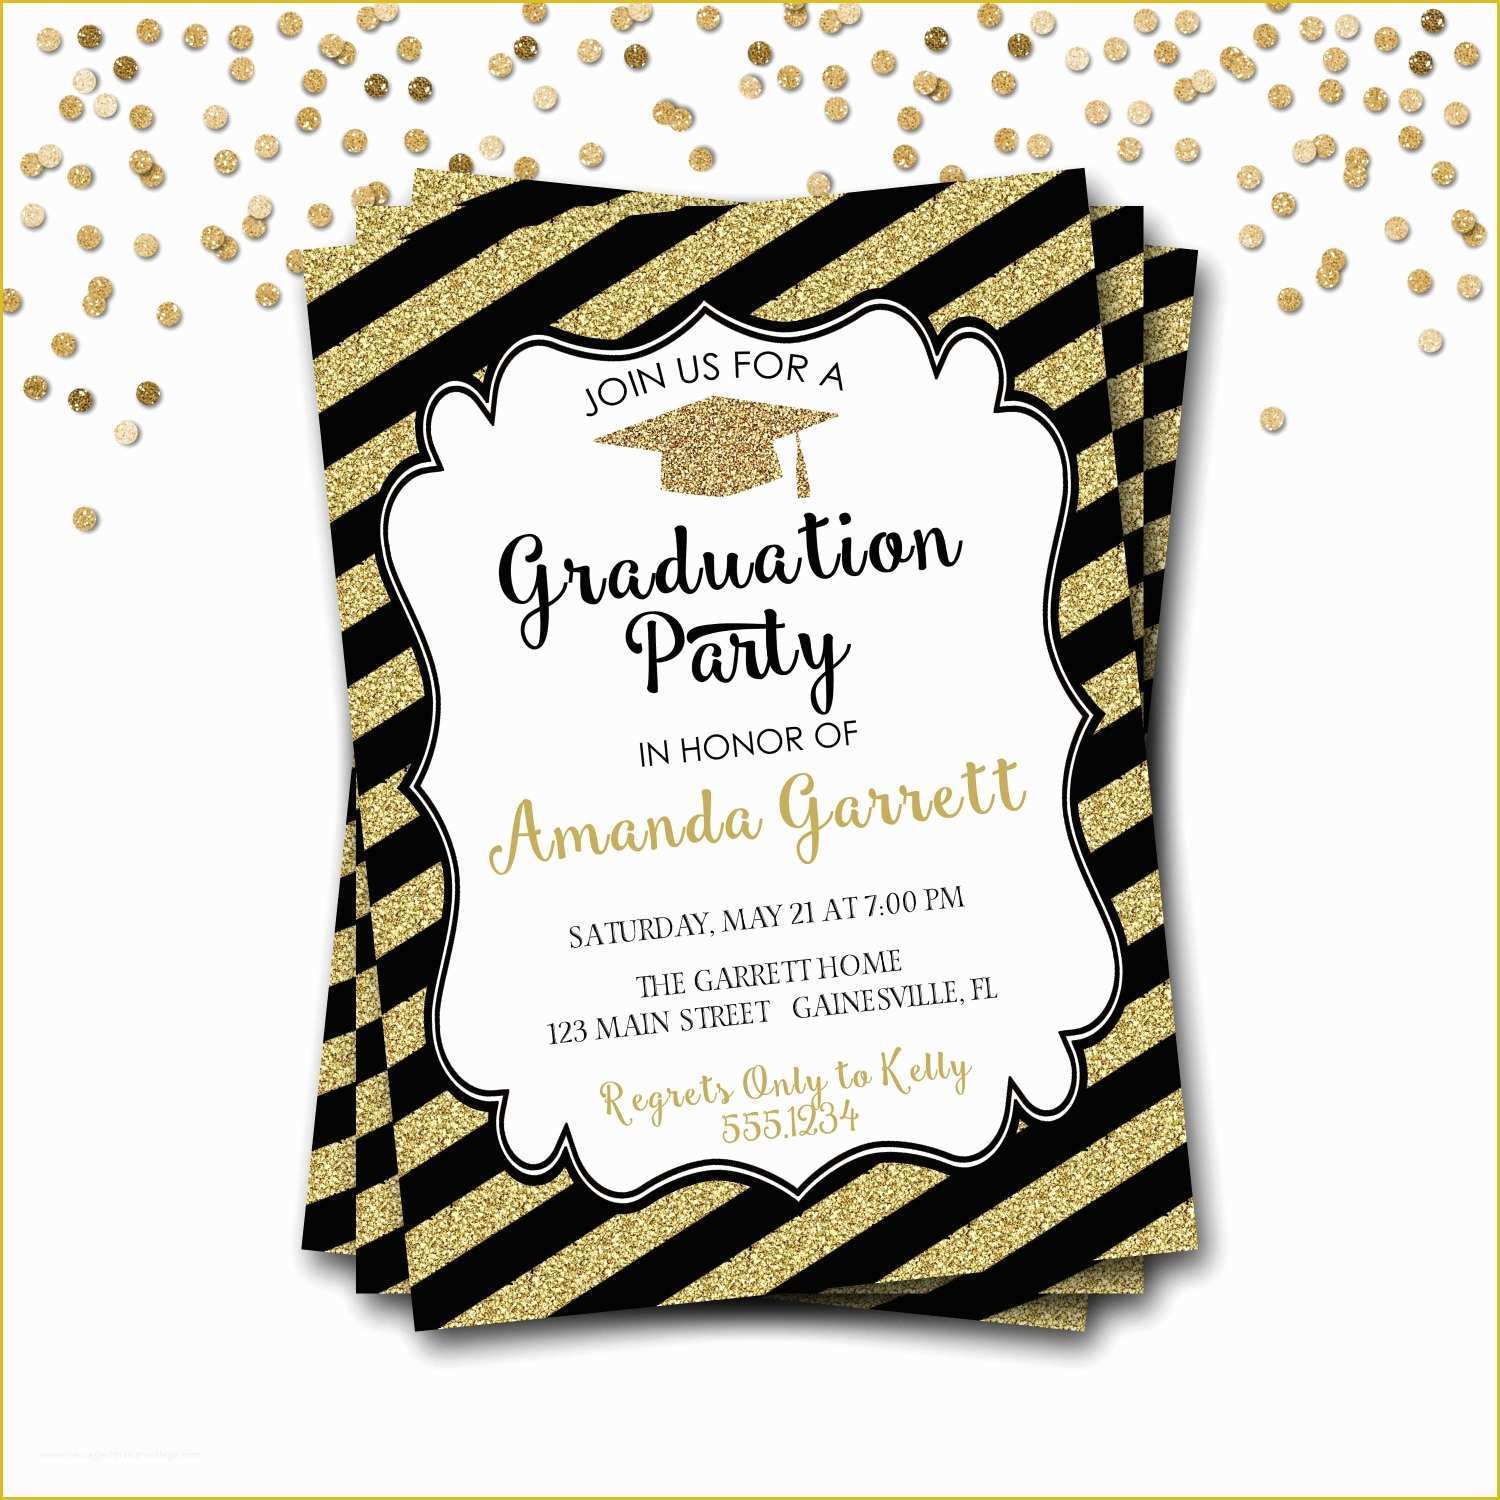 graduation-invitation-templates-free-download-of-black-and-gold-graduation-invitations-which